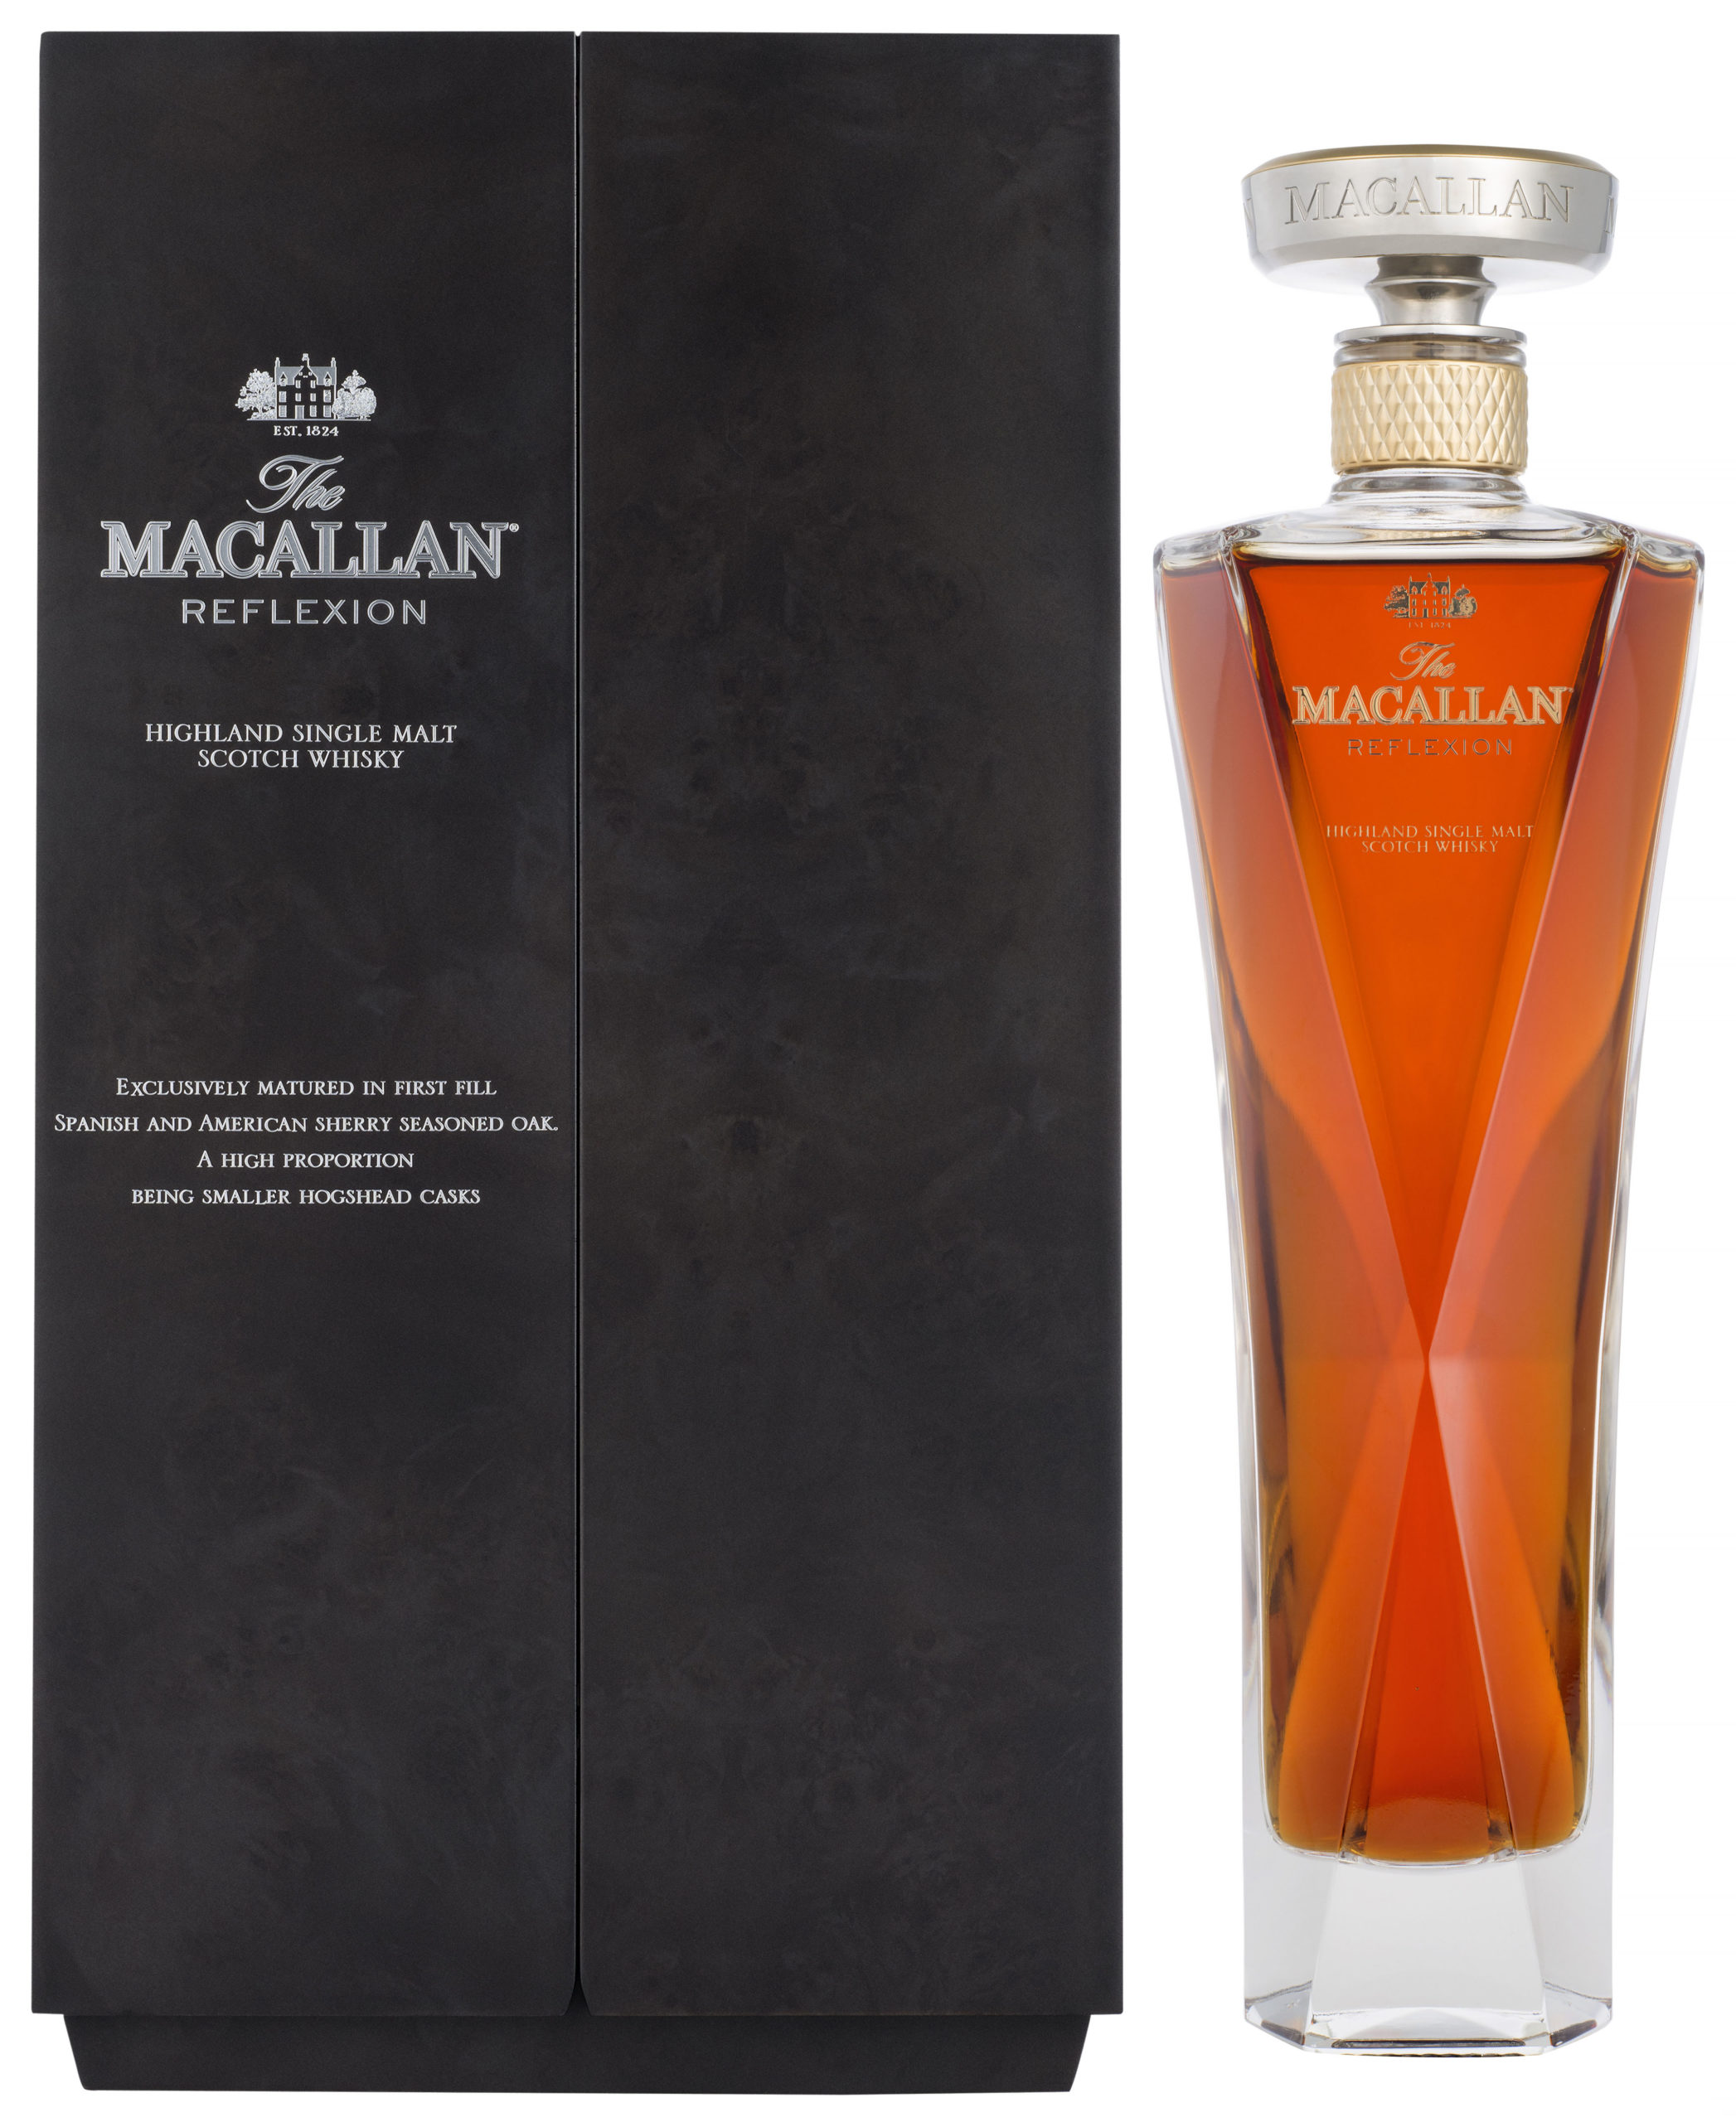 The Macallan Reflexion Single Malt